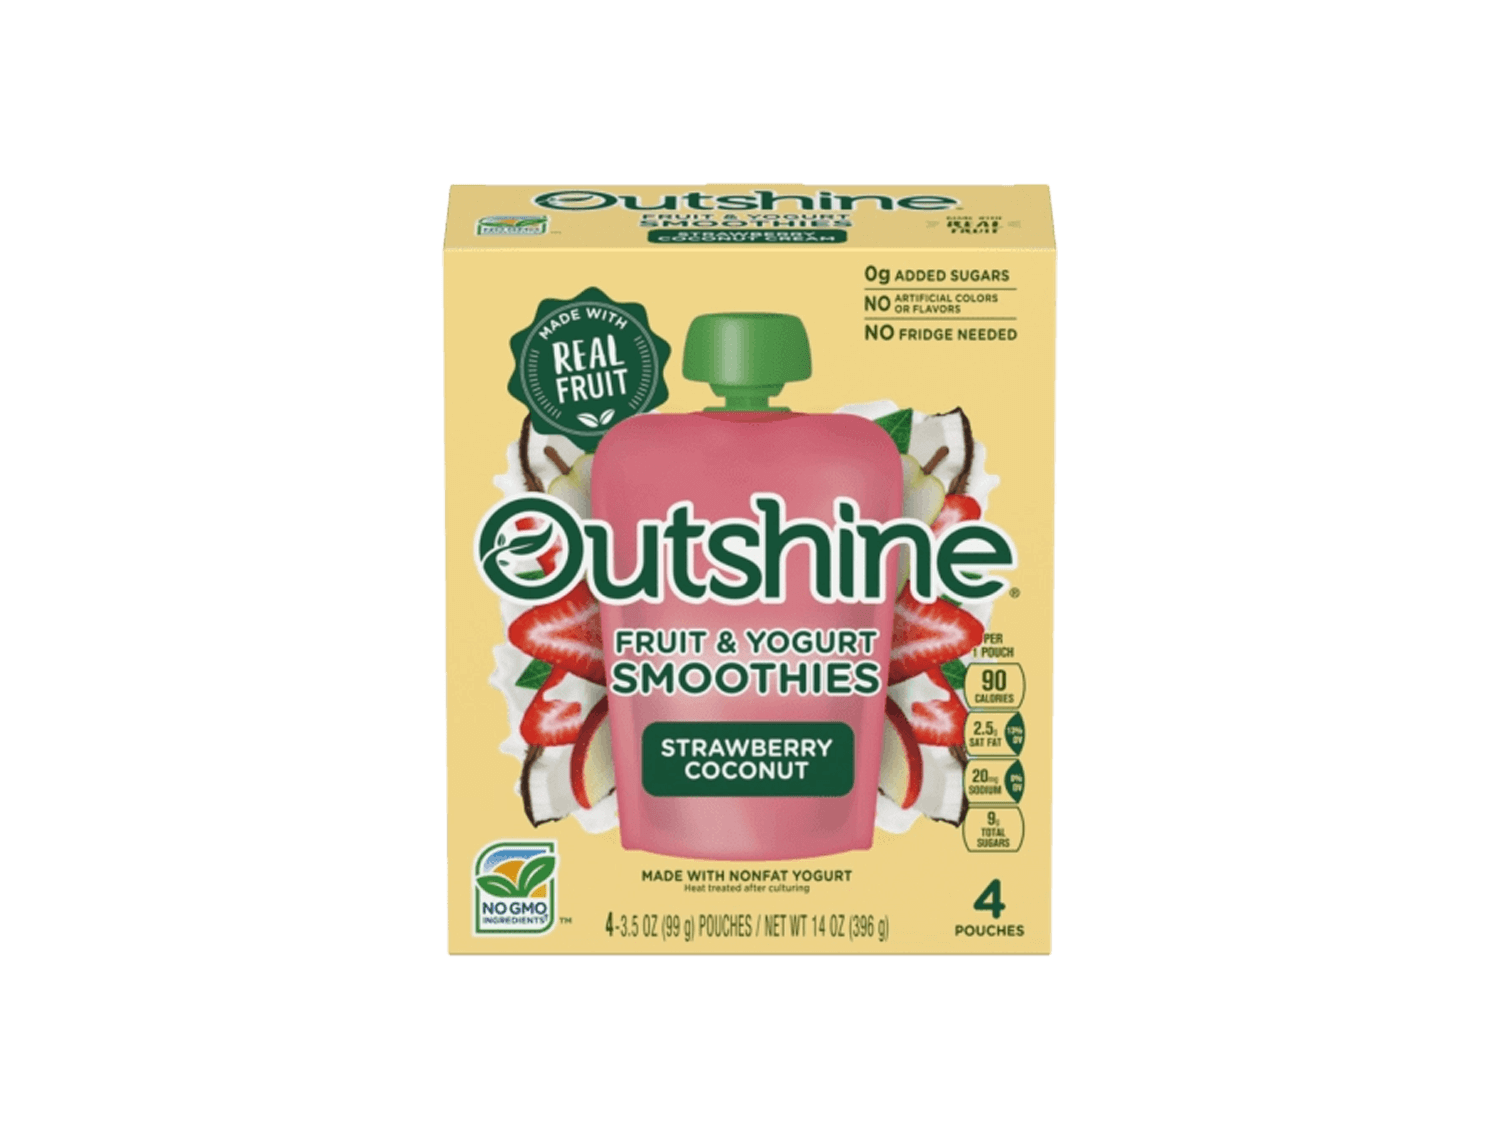 Box of Outshine strawberry coconut fruit & yogurt smoothies